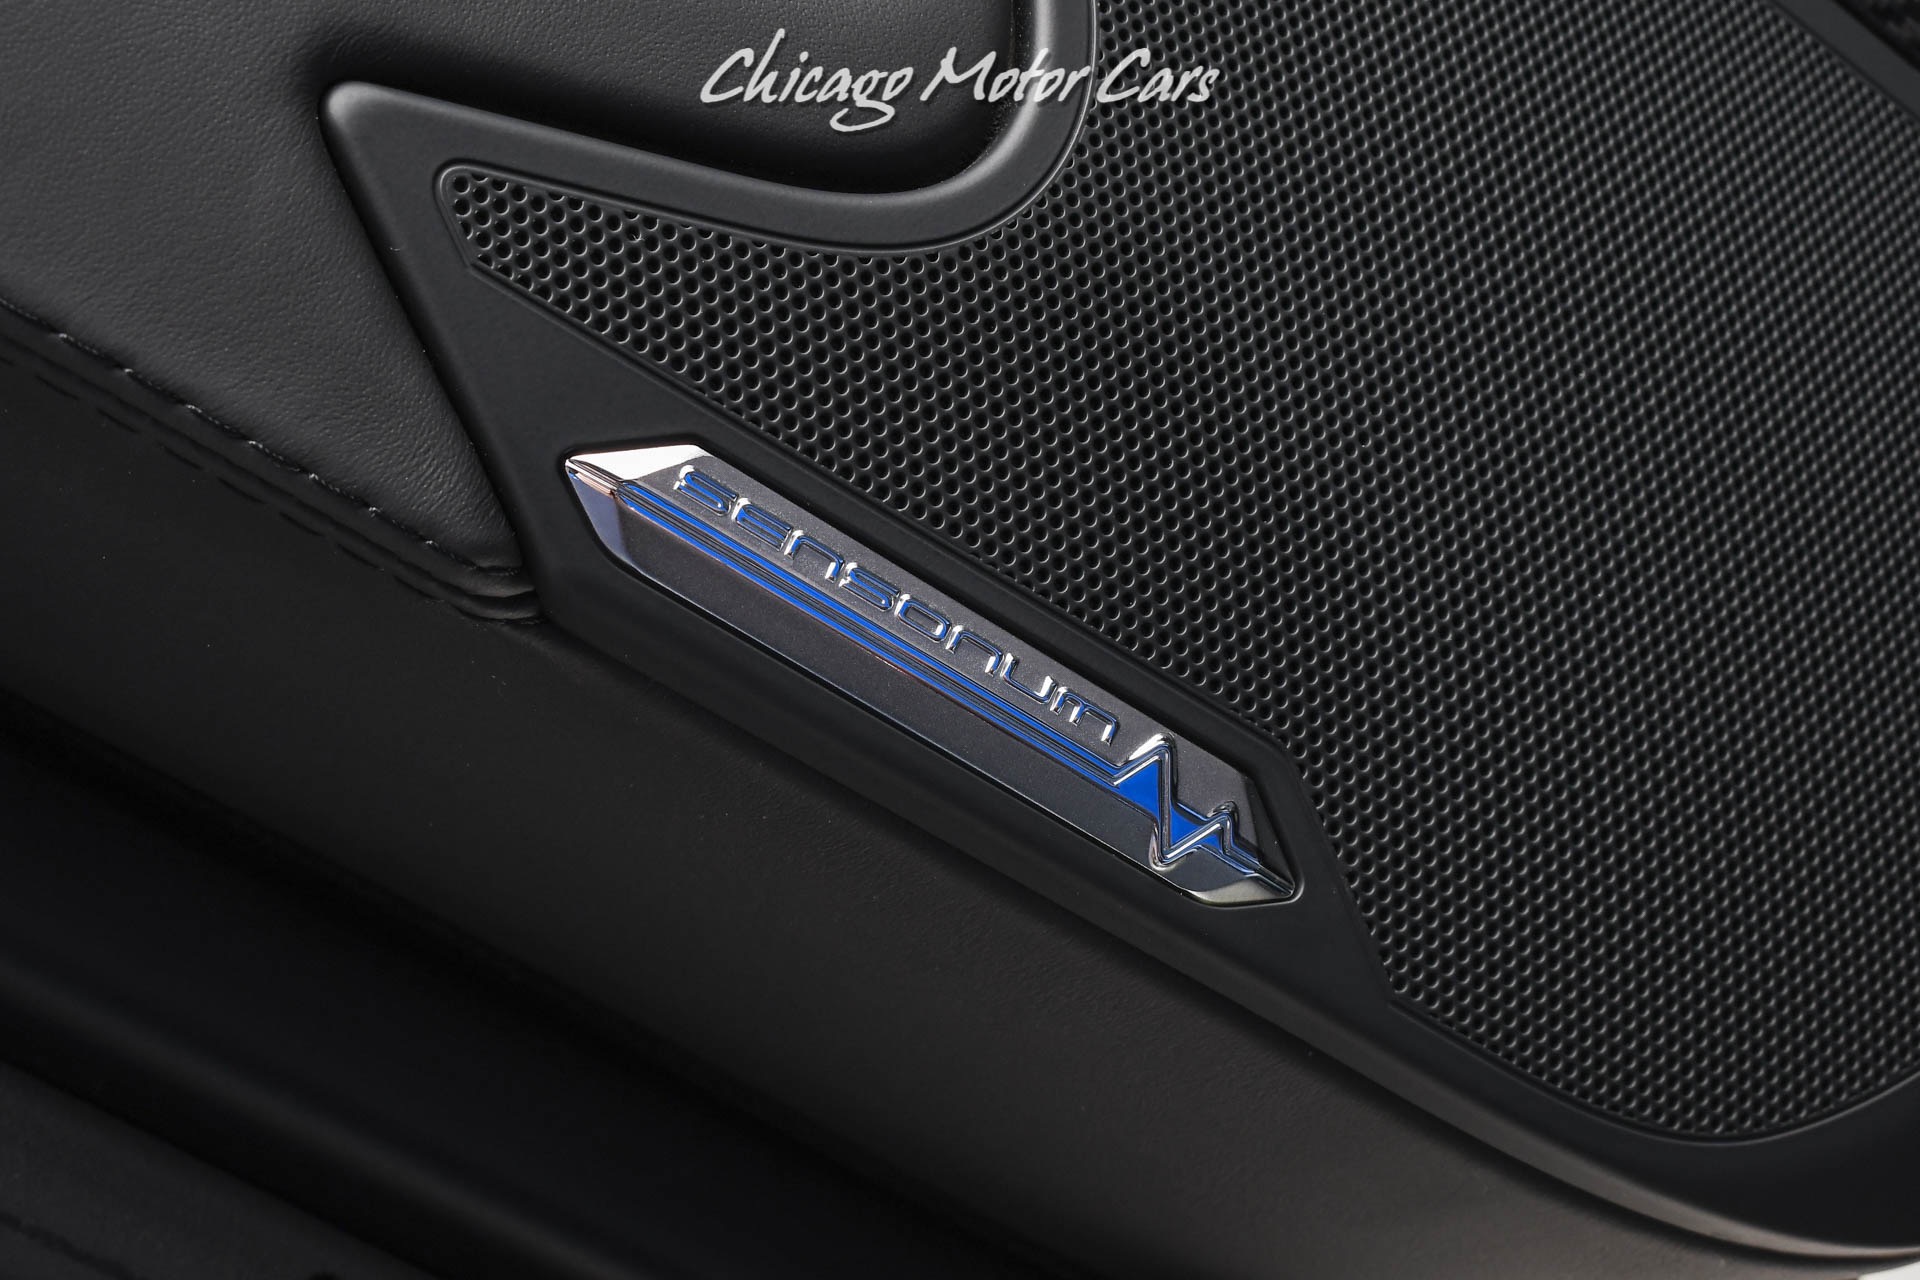 Used-2018-Lamborghini-Aventador-S-LP740-4-Roadster-MSRP-572772-Carbon-Fiber-Everything-Amazing-Spec